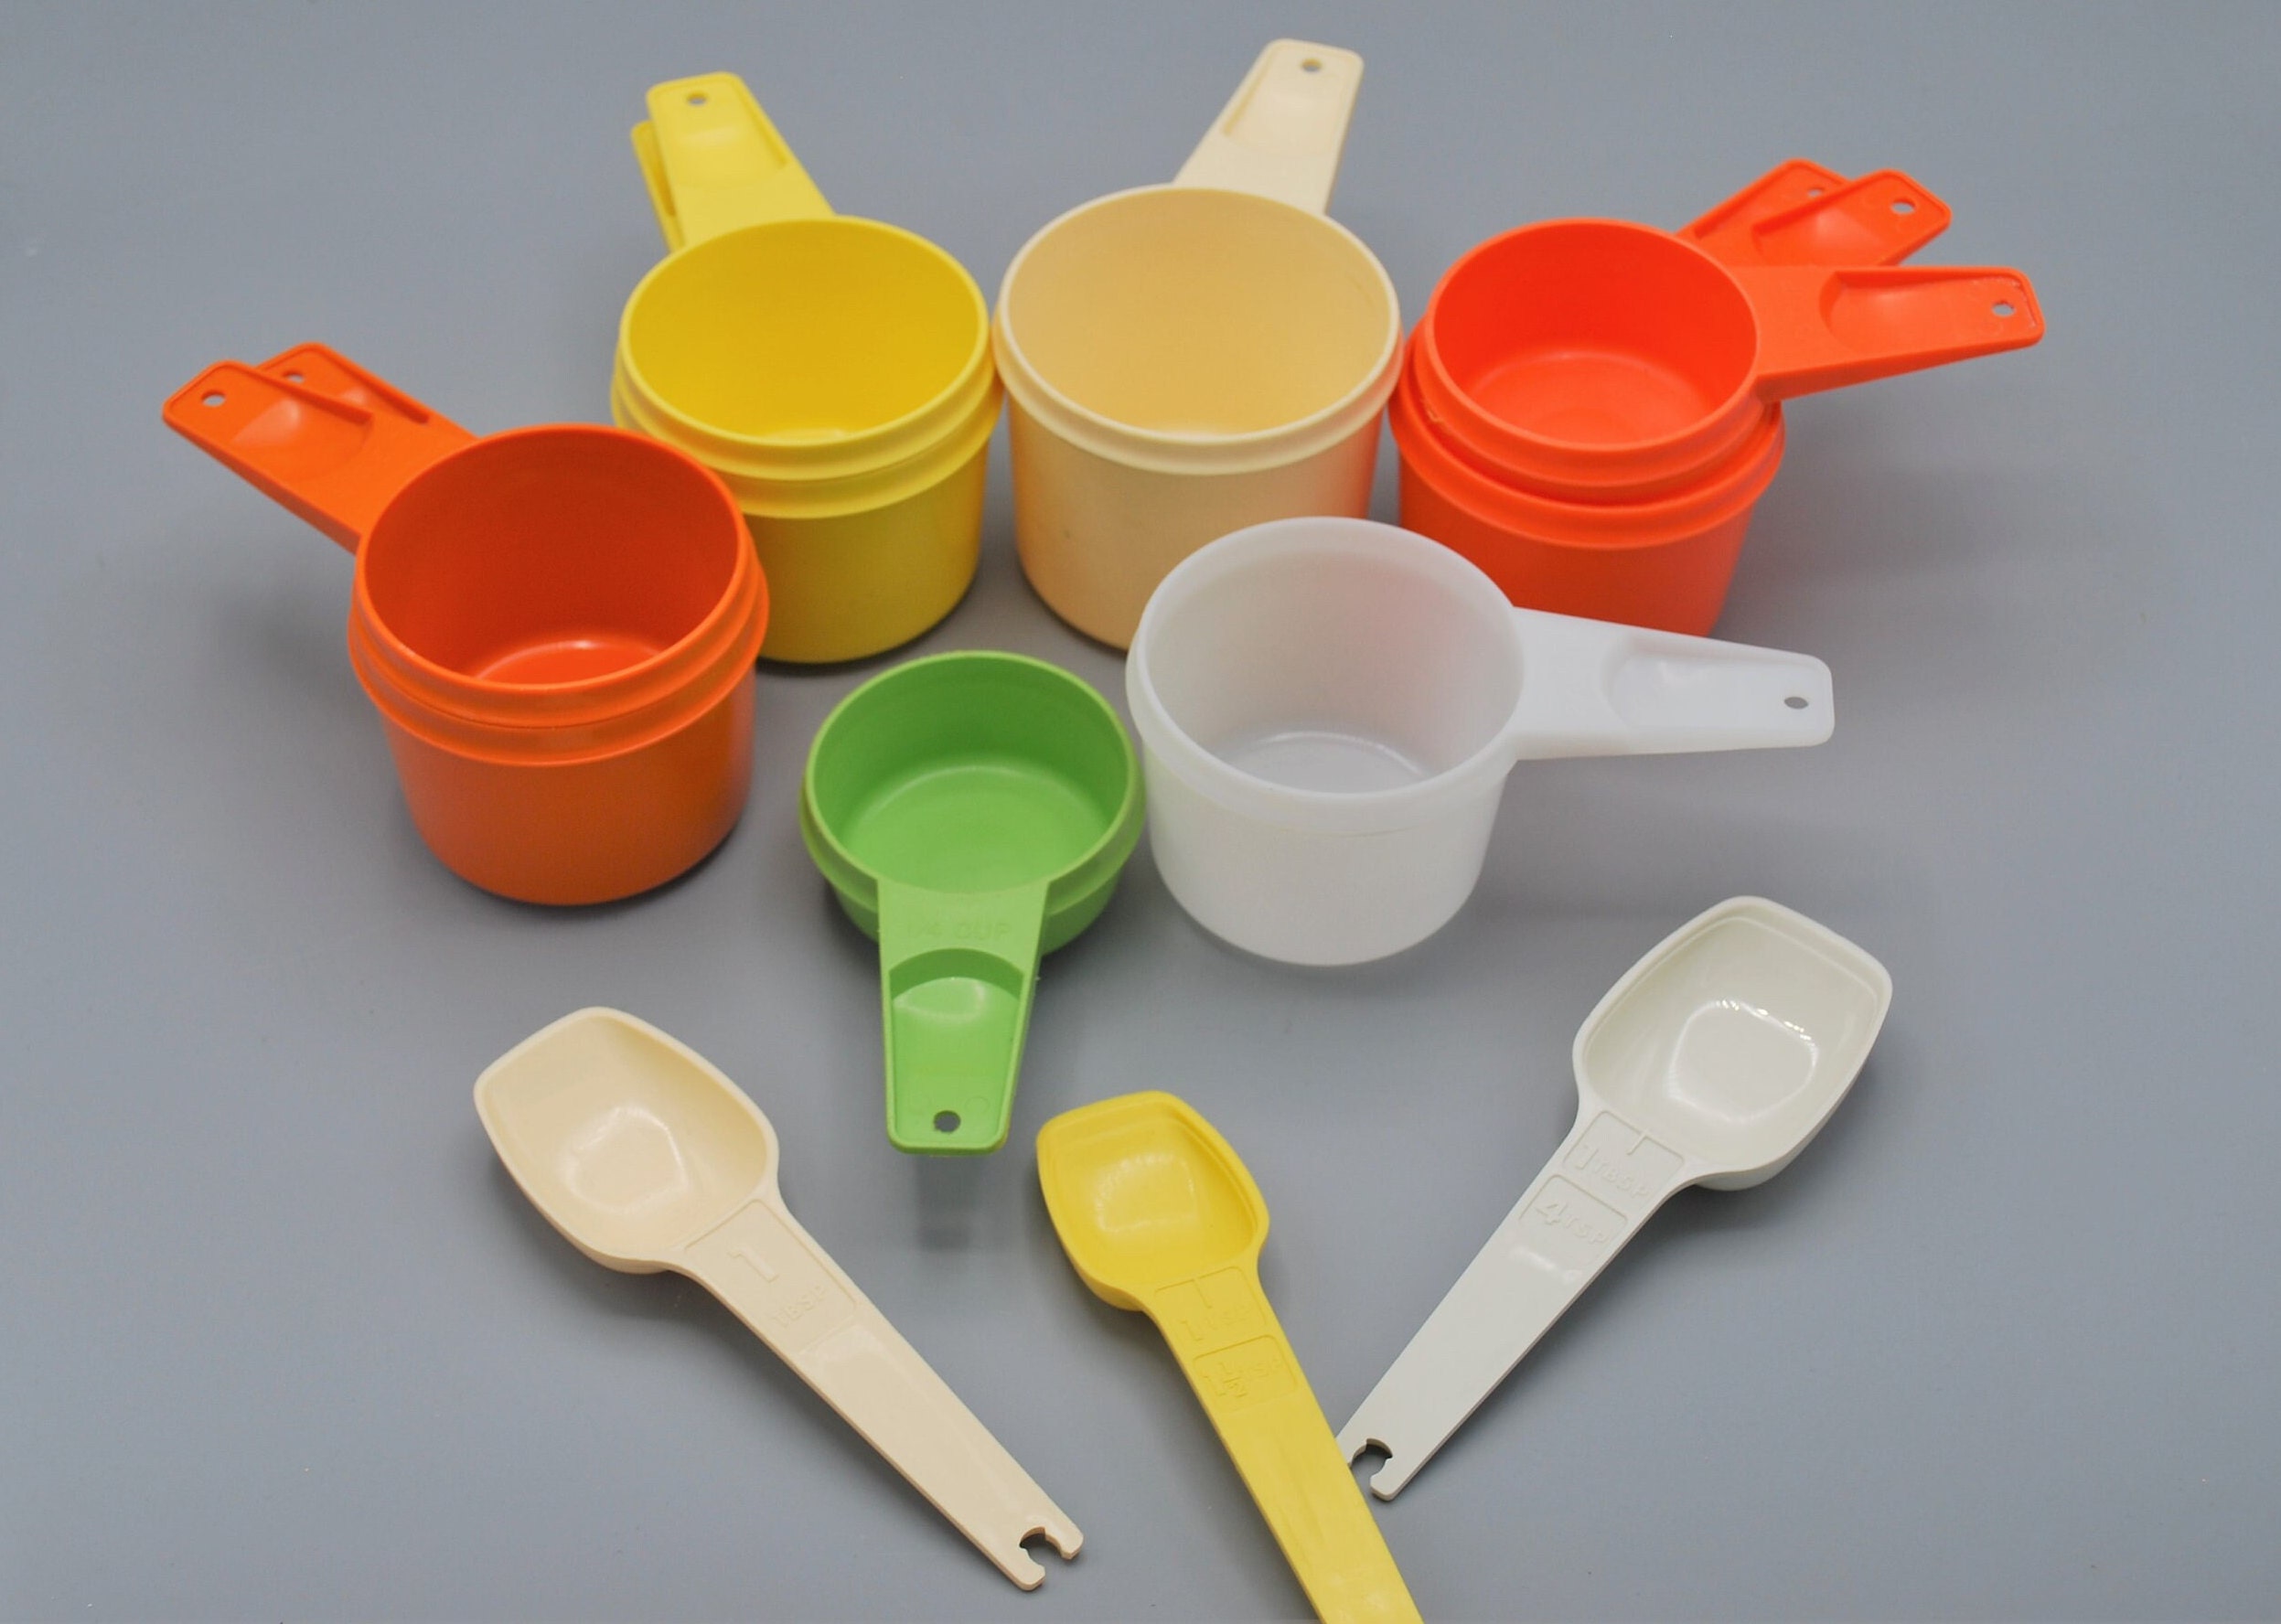 Tupperware Measuring Cups & Spoons Set Nesting Scoops PURPLE Rare Baking  Tools